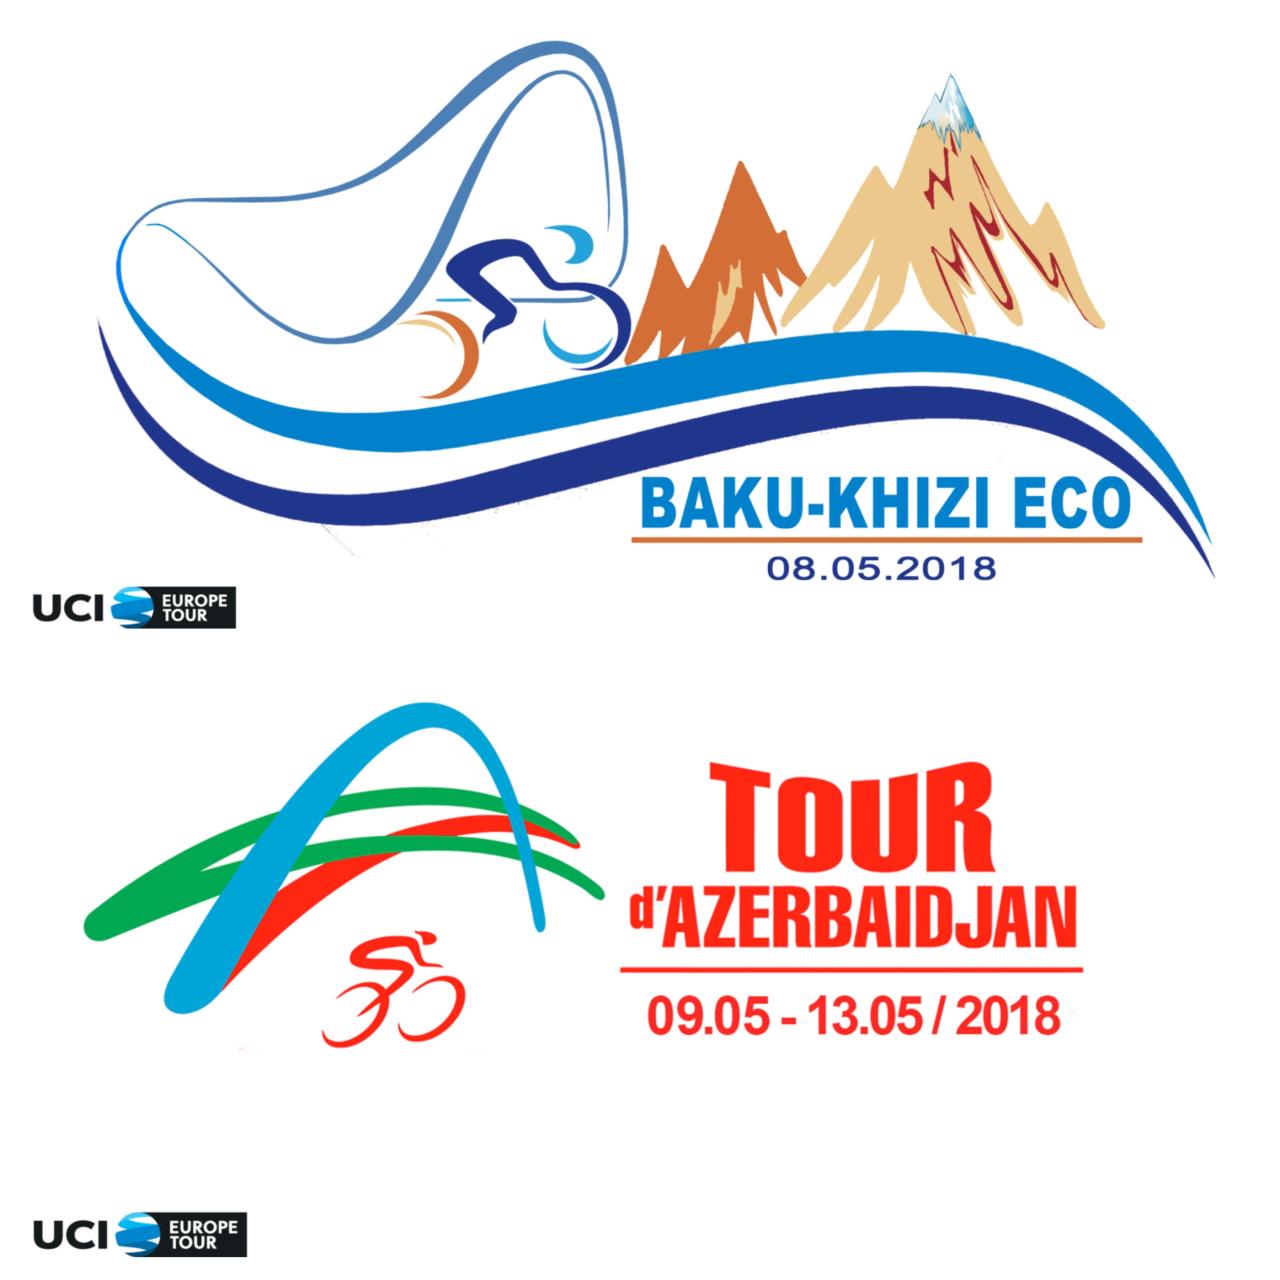 Start date of Tour d’Azerbaidjan 2018 released